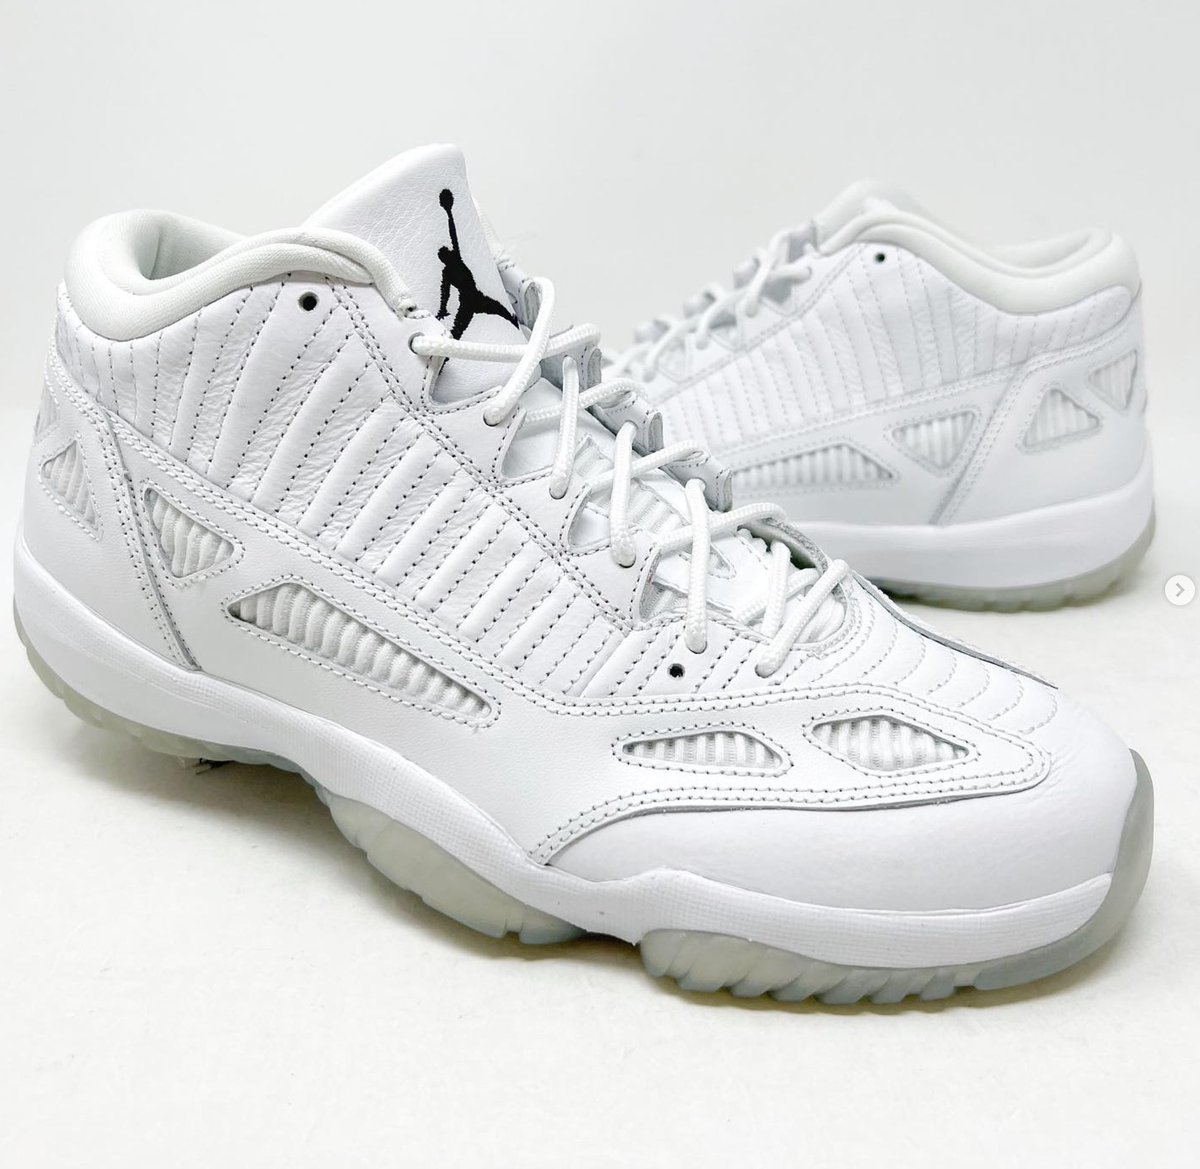 ❄️ Air Jordan 11 IE 'White-Out' Samples (2009) 🌨️